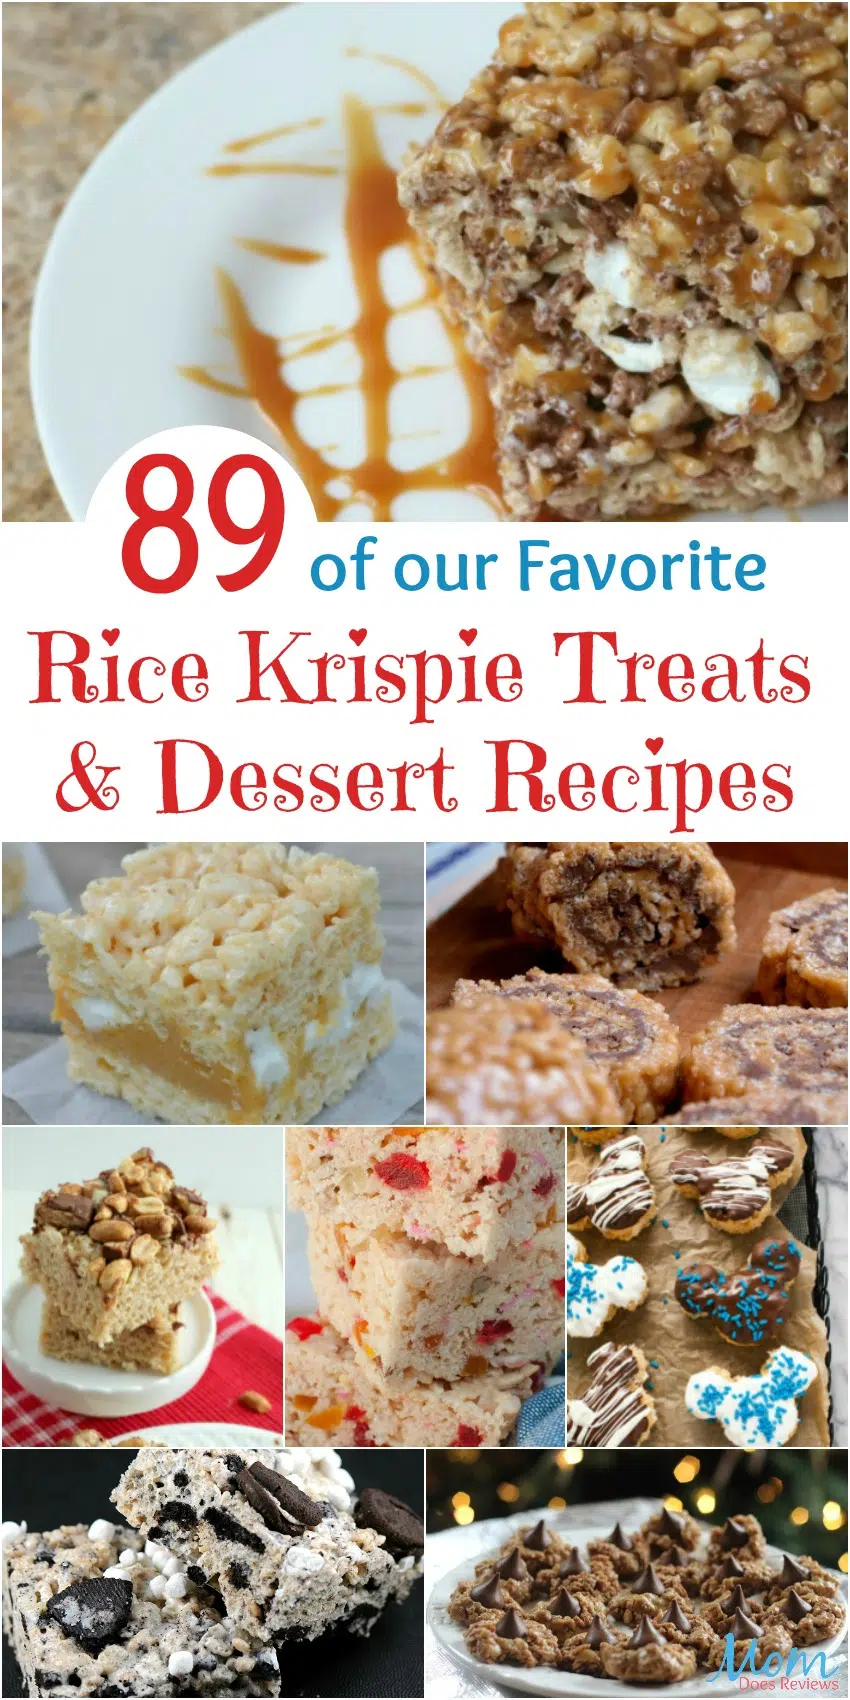 89 of our Favorite Rice Krispie Treats & Dessert #Recipes #desserts #treats #sweets #yummy #ricekrispietreats 